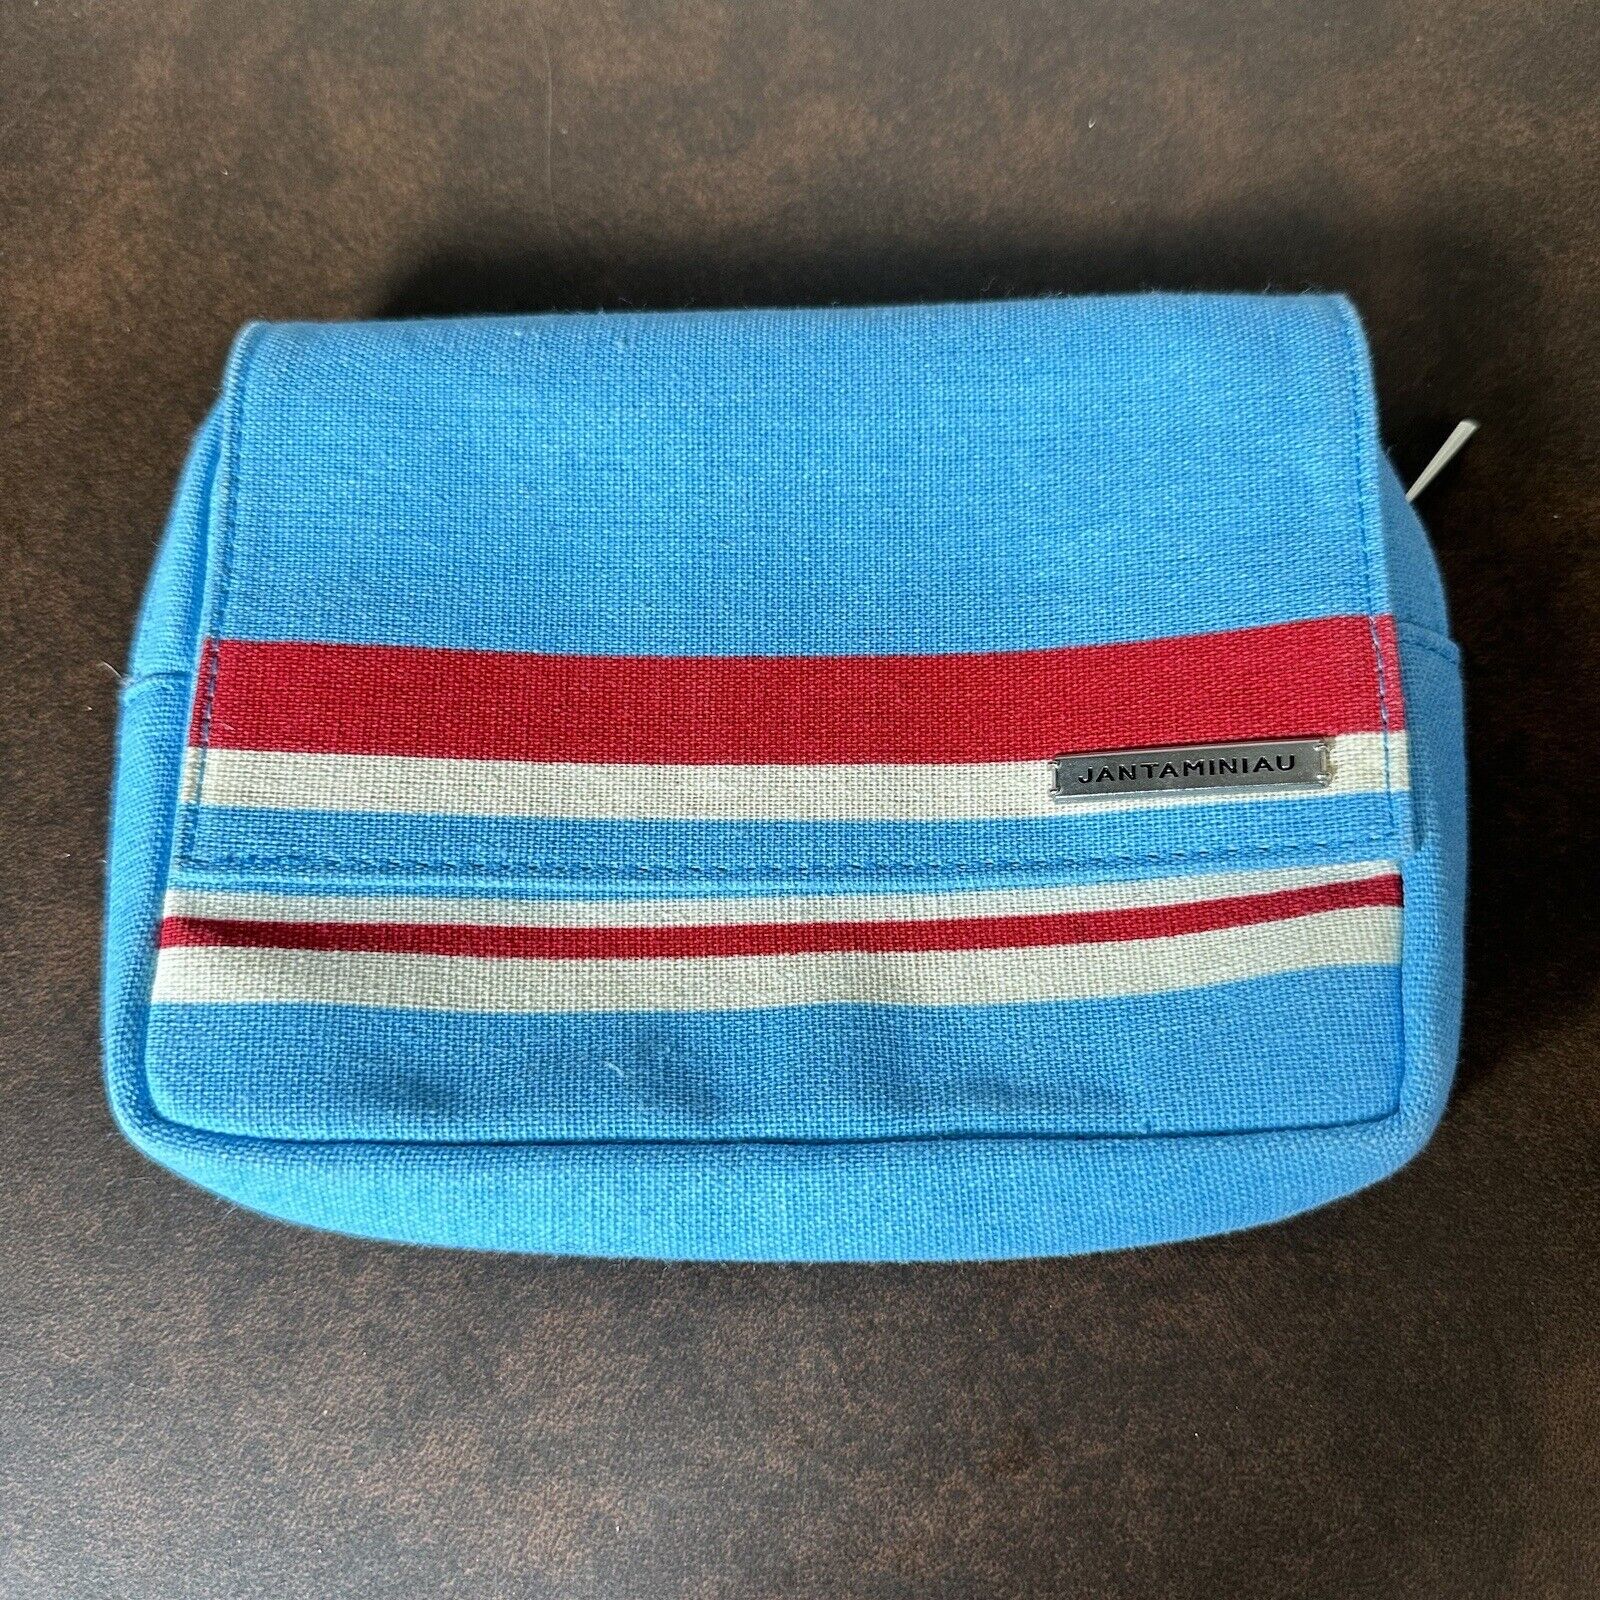 KLM X Jantaminiau Travel Bag Blue Fold Over Magnet Zip Top Clutch Accessory